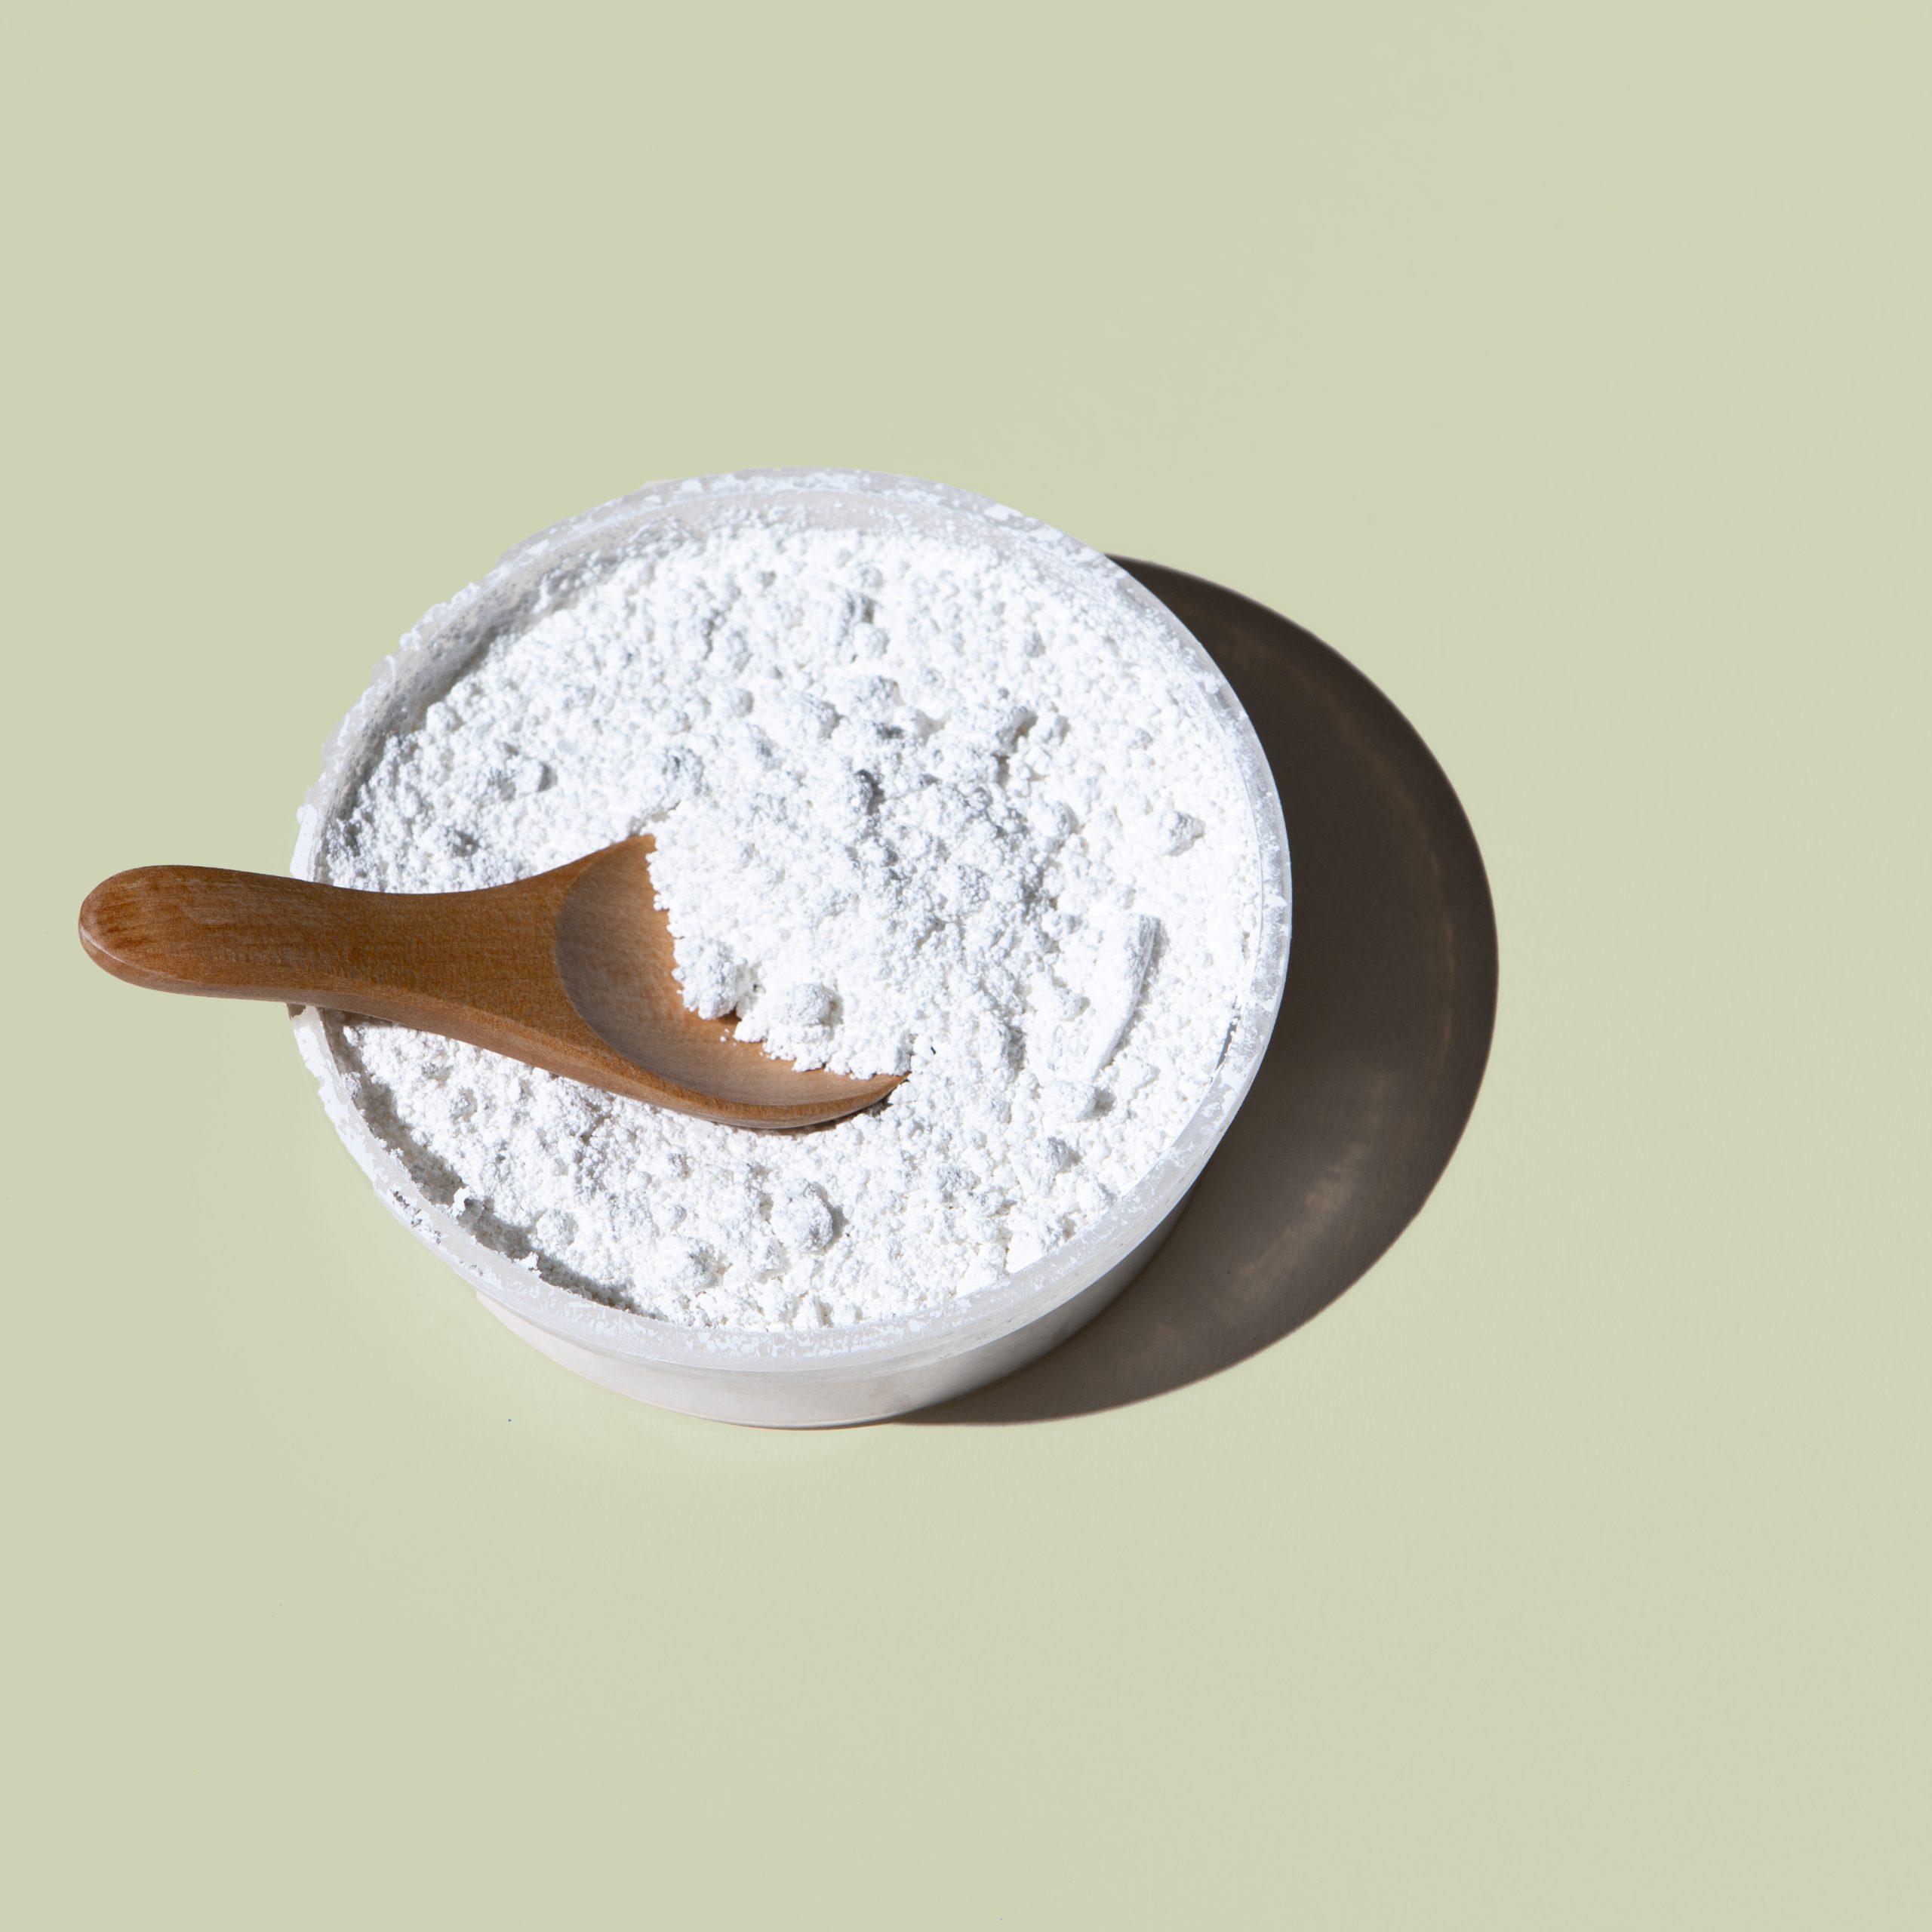 Benefits of goat milk powder for skin